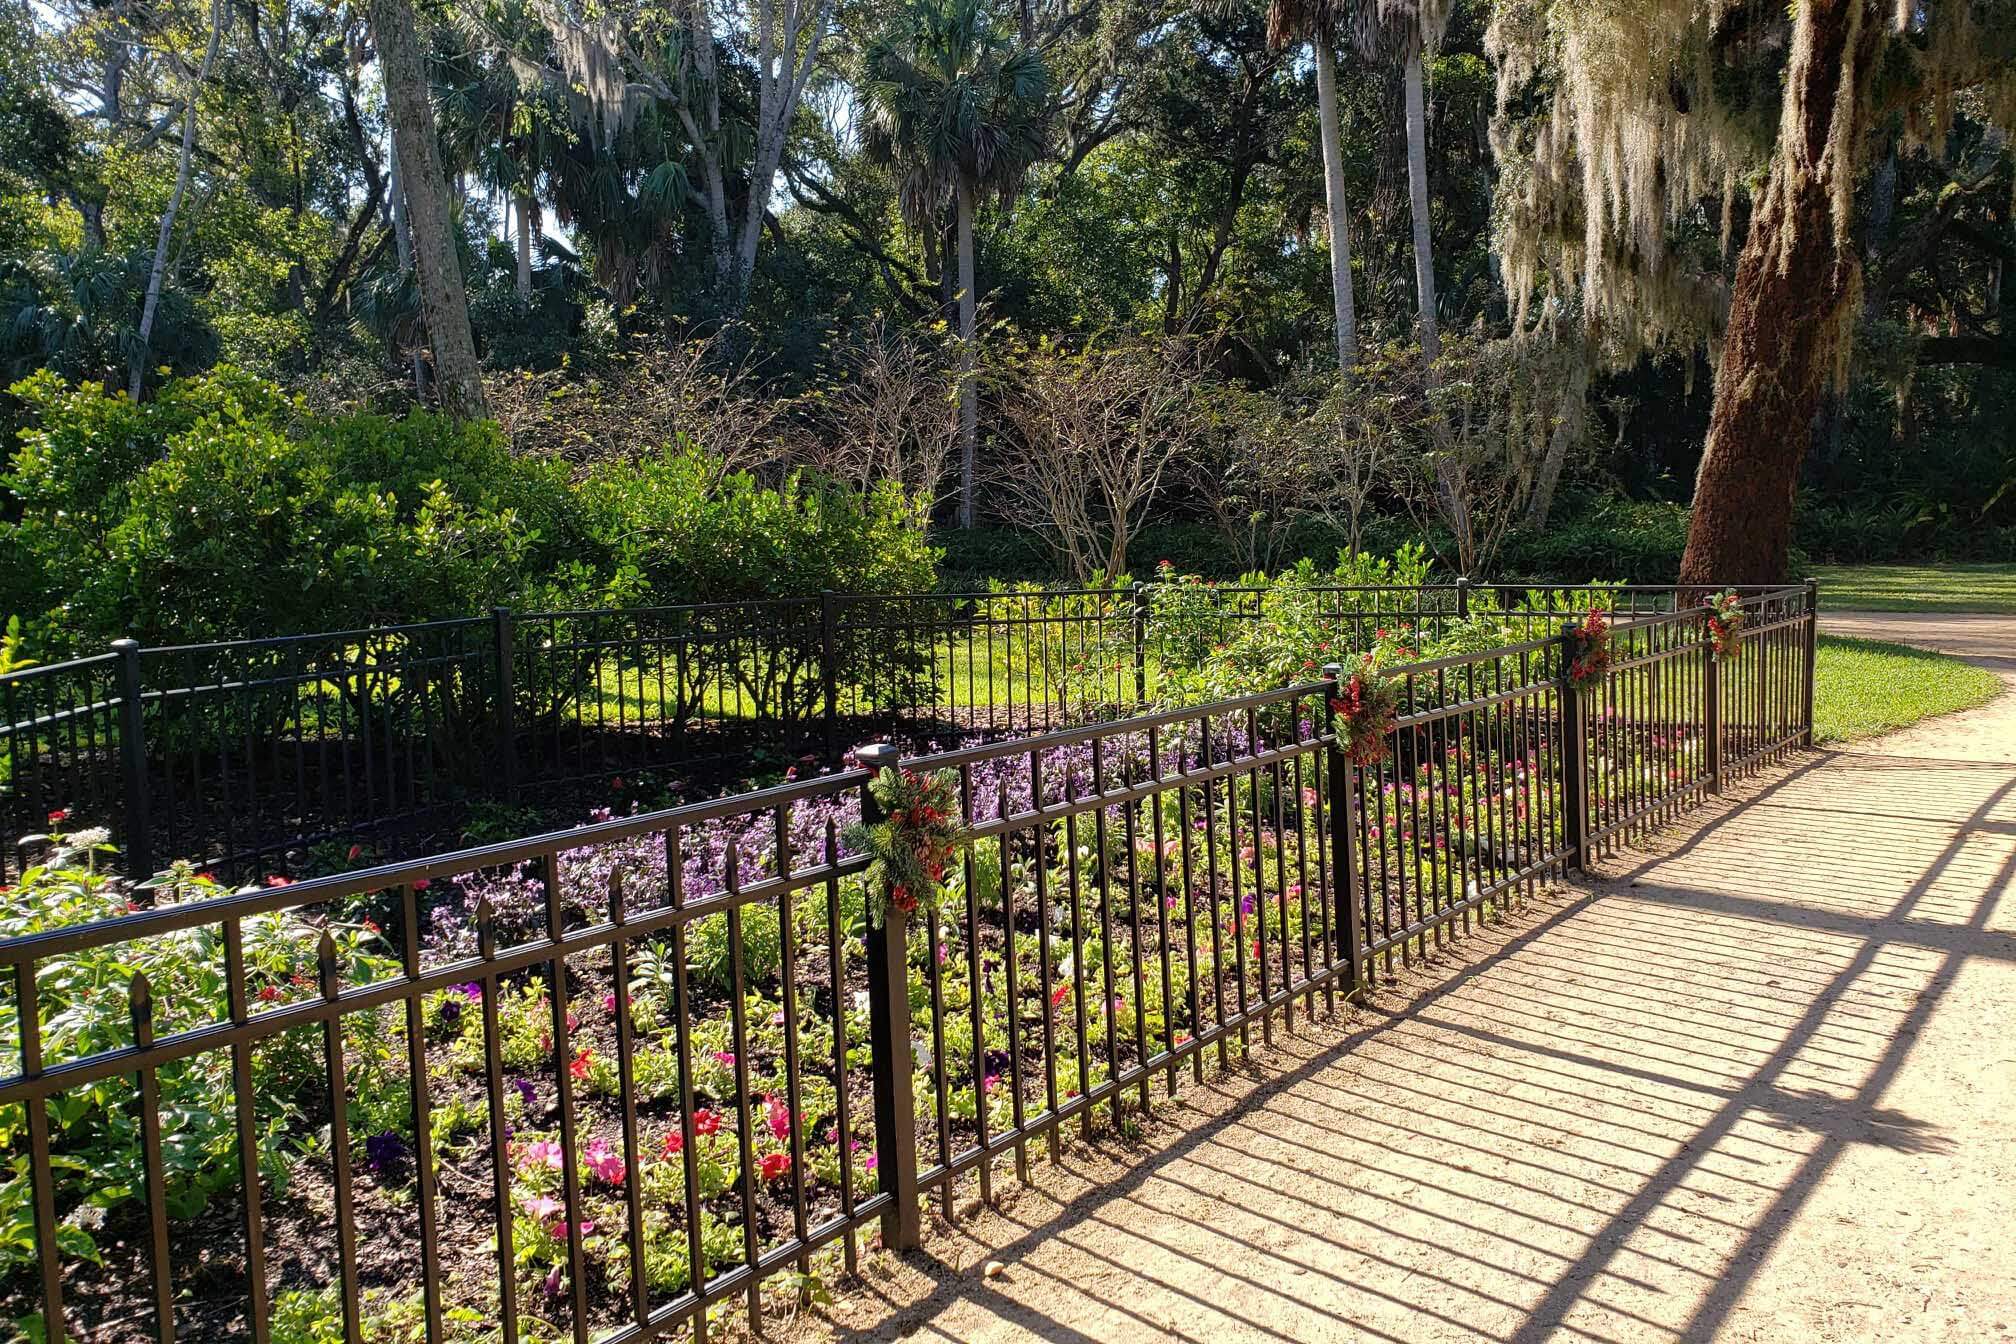 Pathway at the Washington Oaks Gardens